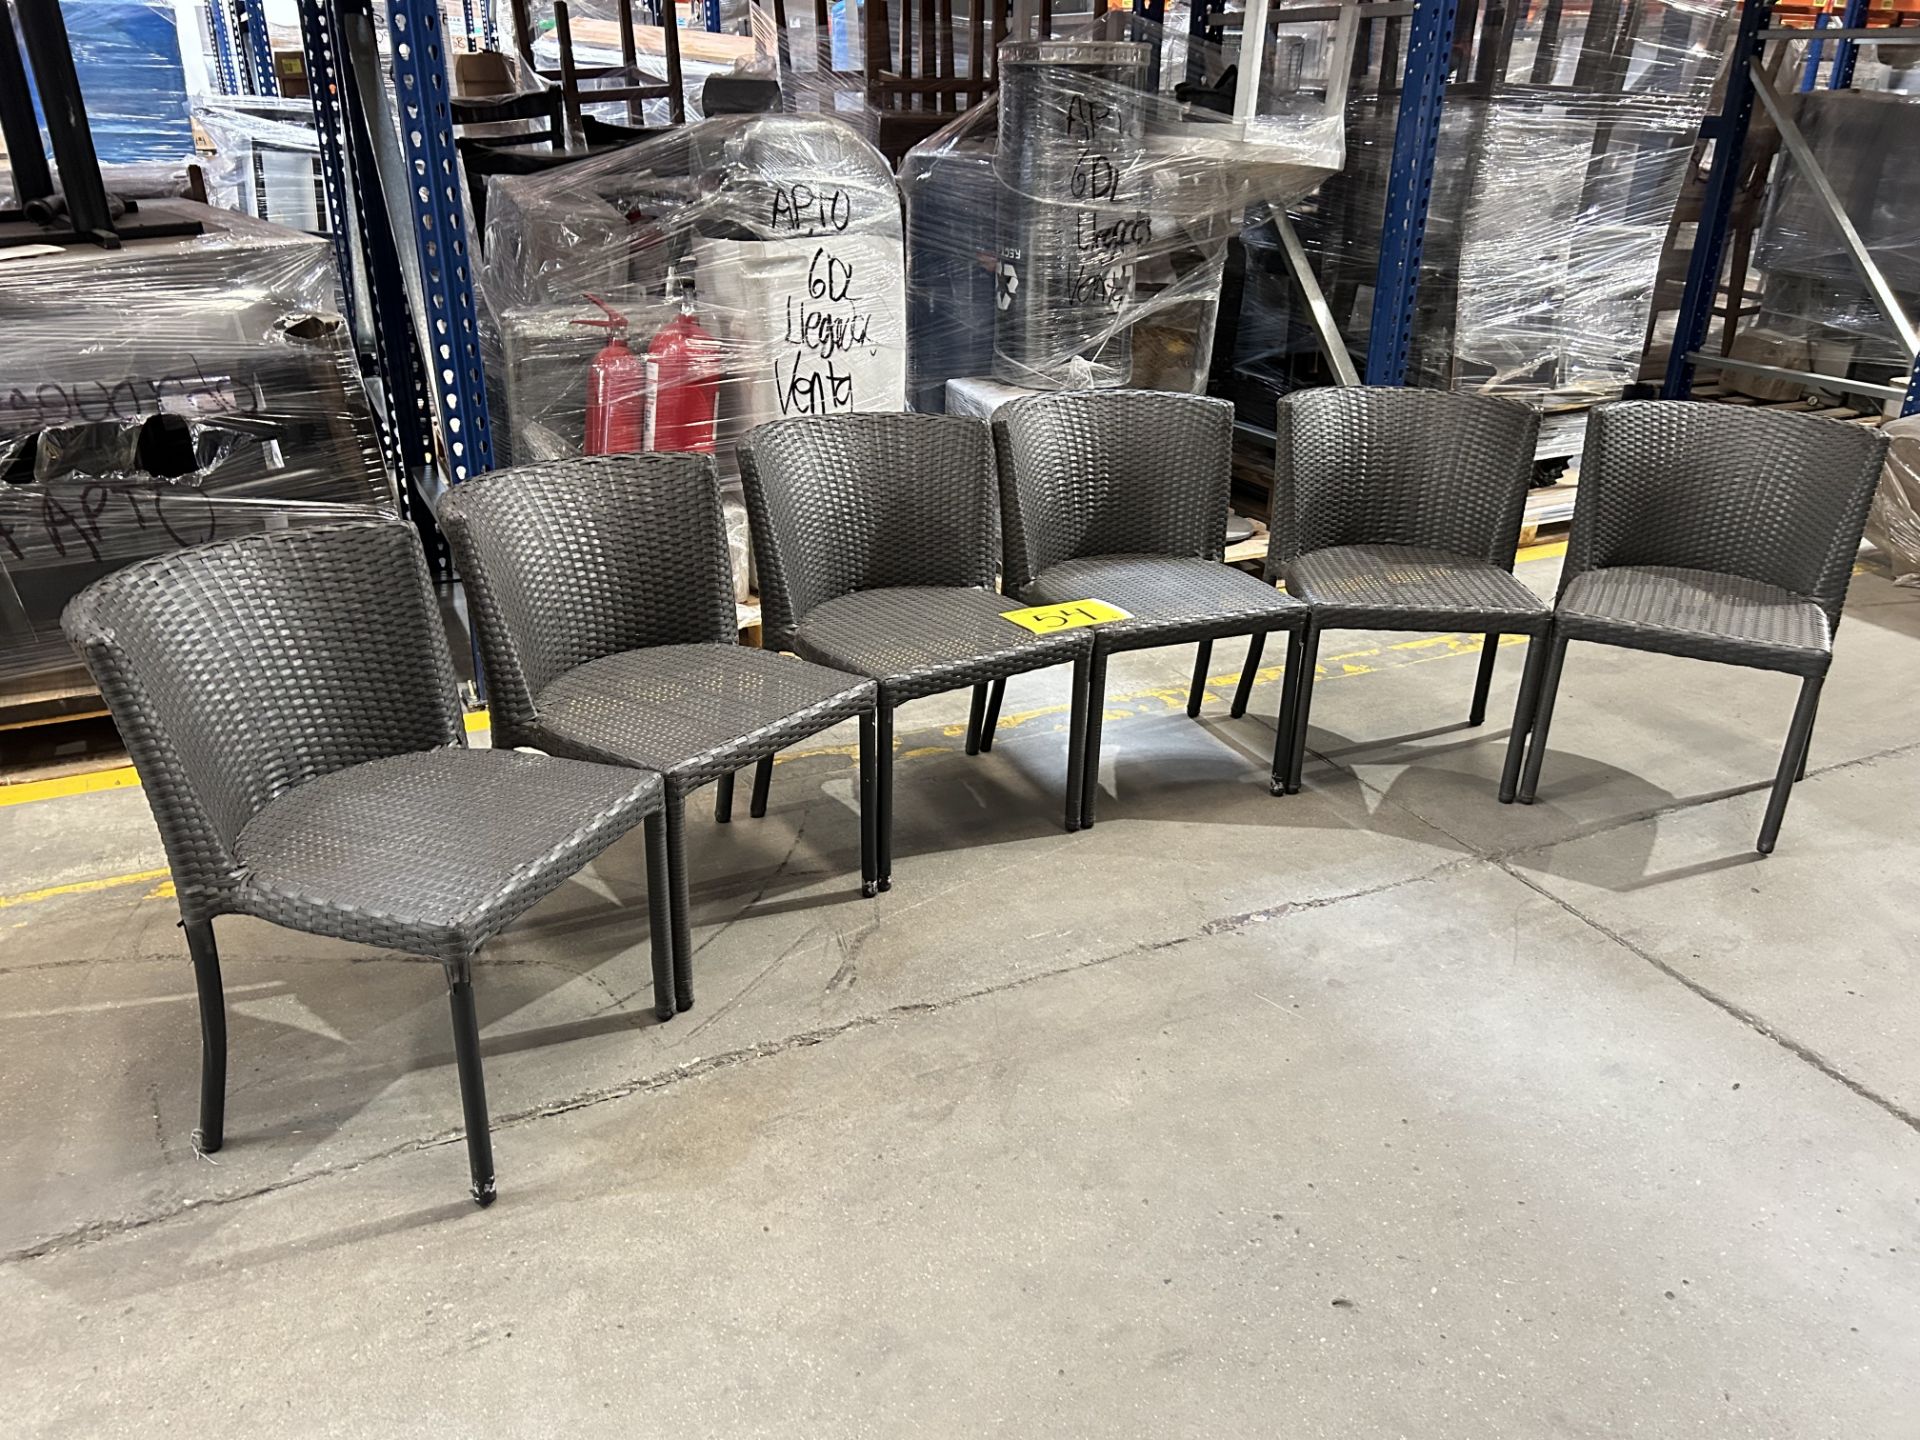 6 sillas de ratán respaldo curvo para exterior Color Café Medidas 55 cm x 62 cm x 74 cm (Equipo Usa - Image 6 of 10